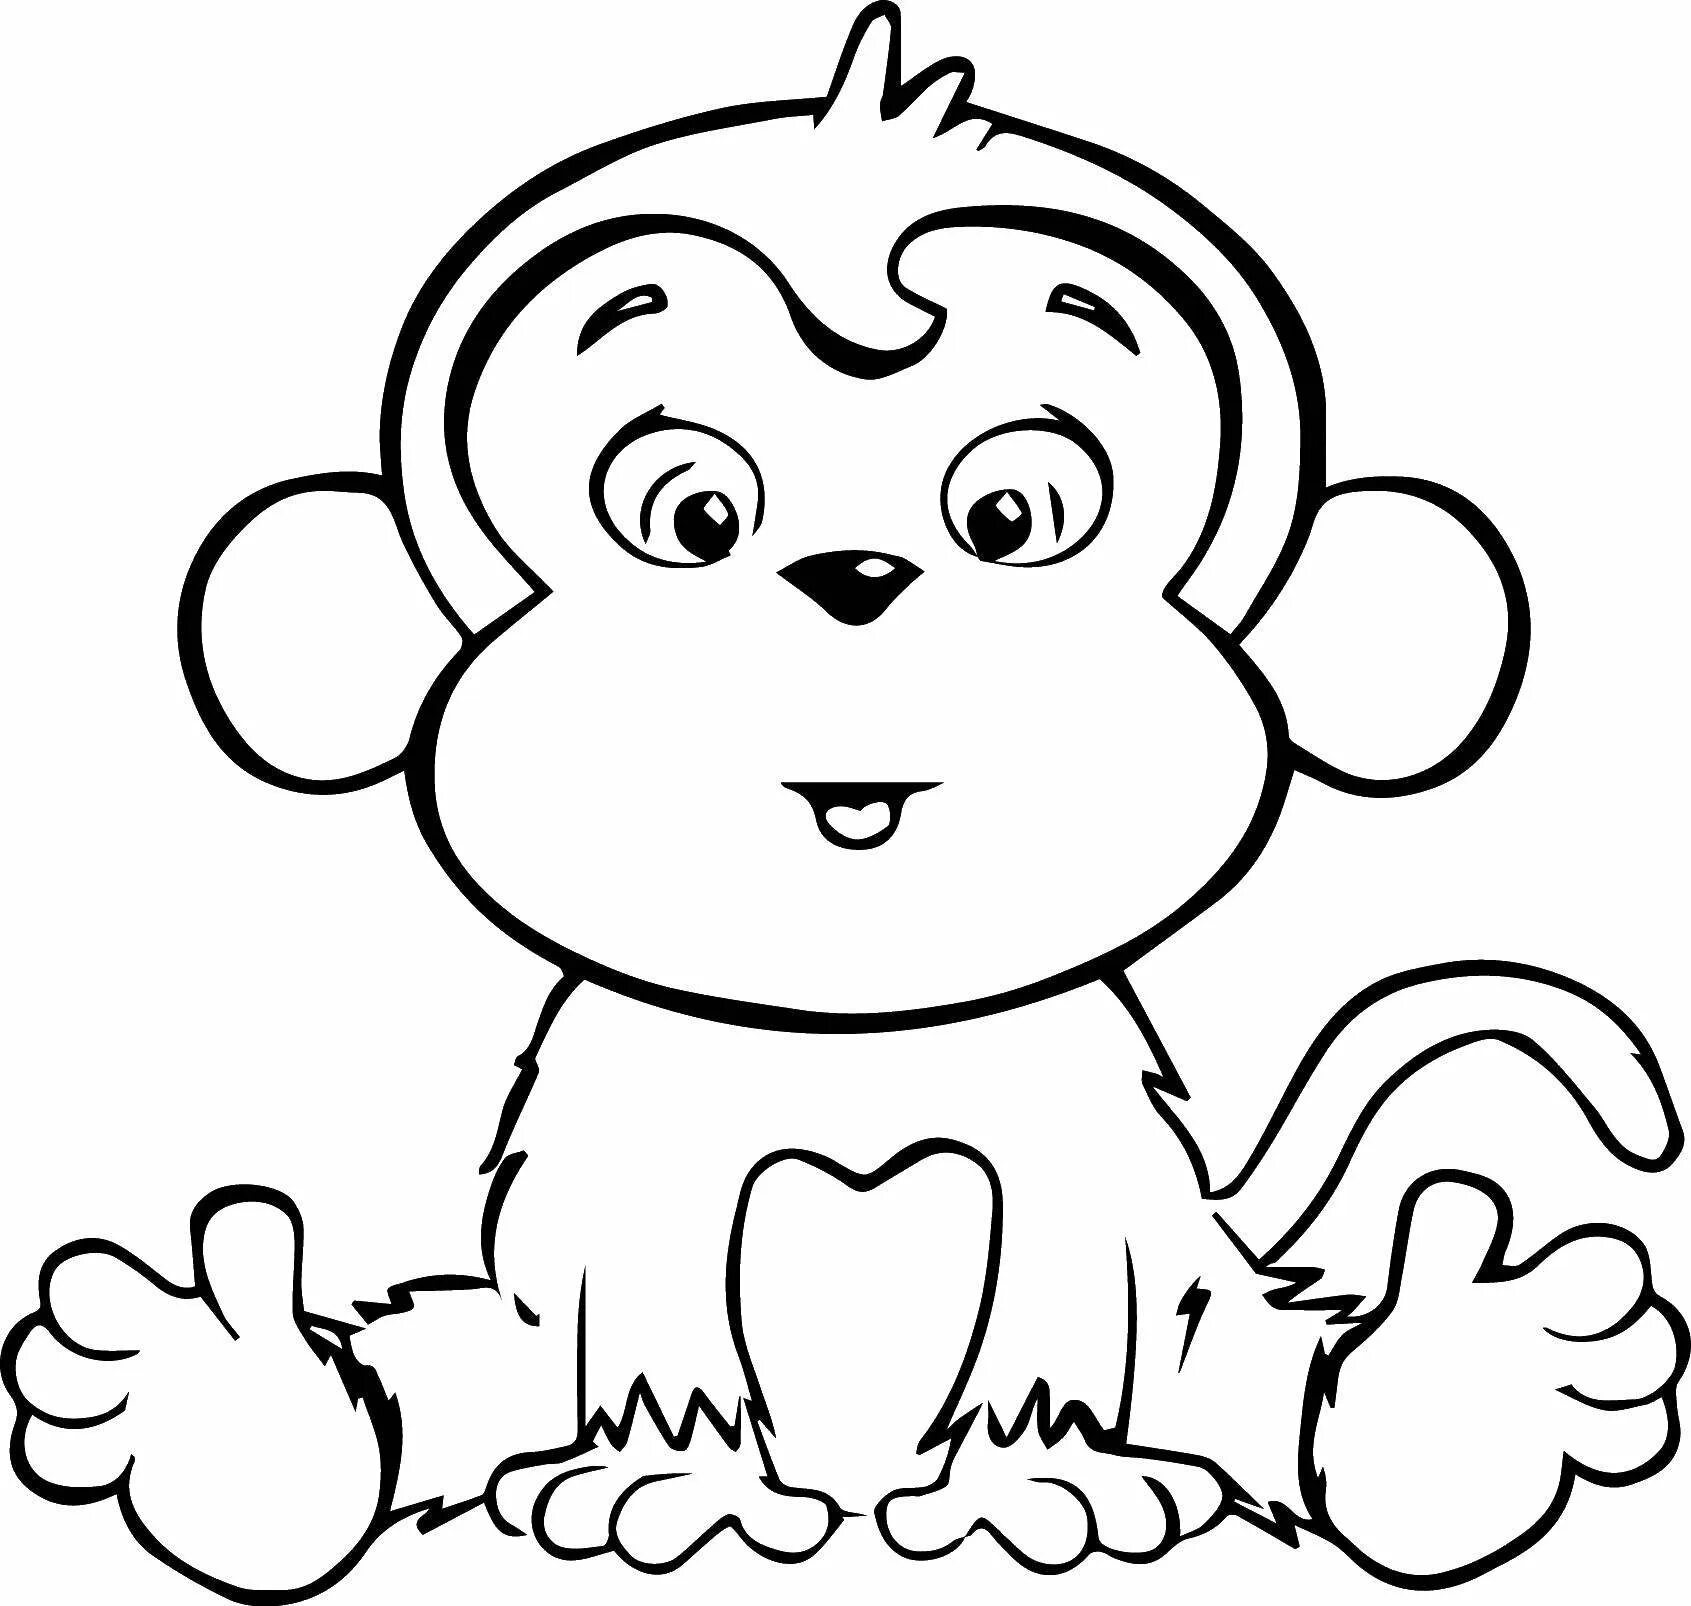 Coloring book shining monkey